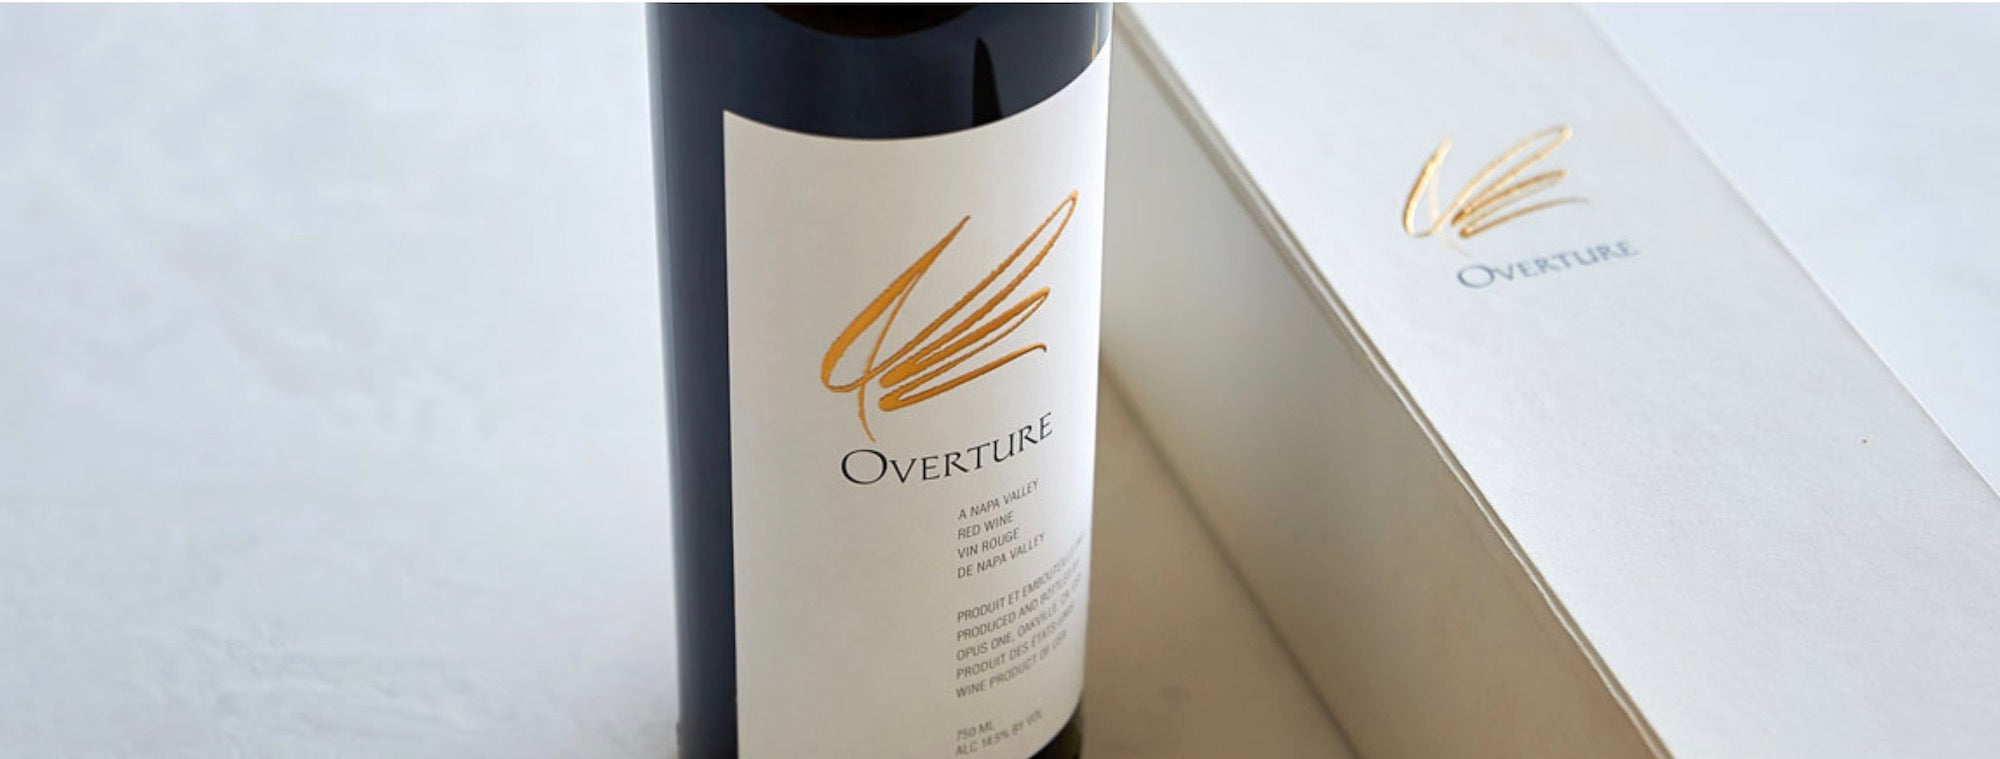 Opus One Overture Napa Valley Bordeaux Blend